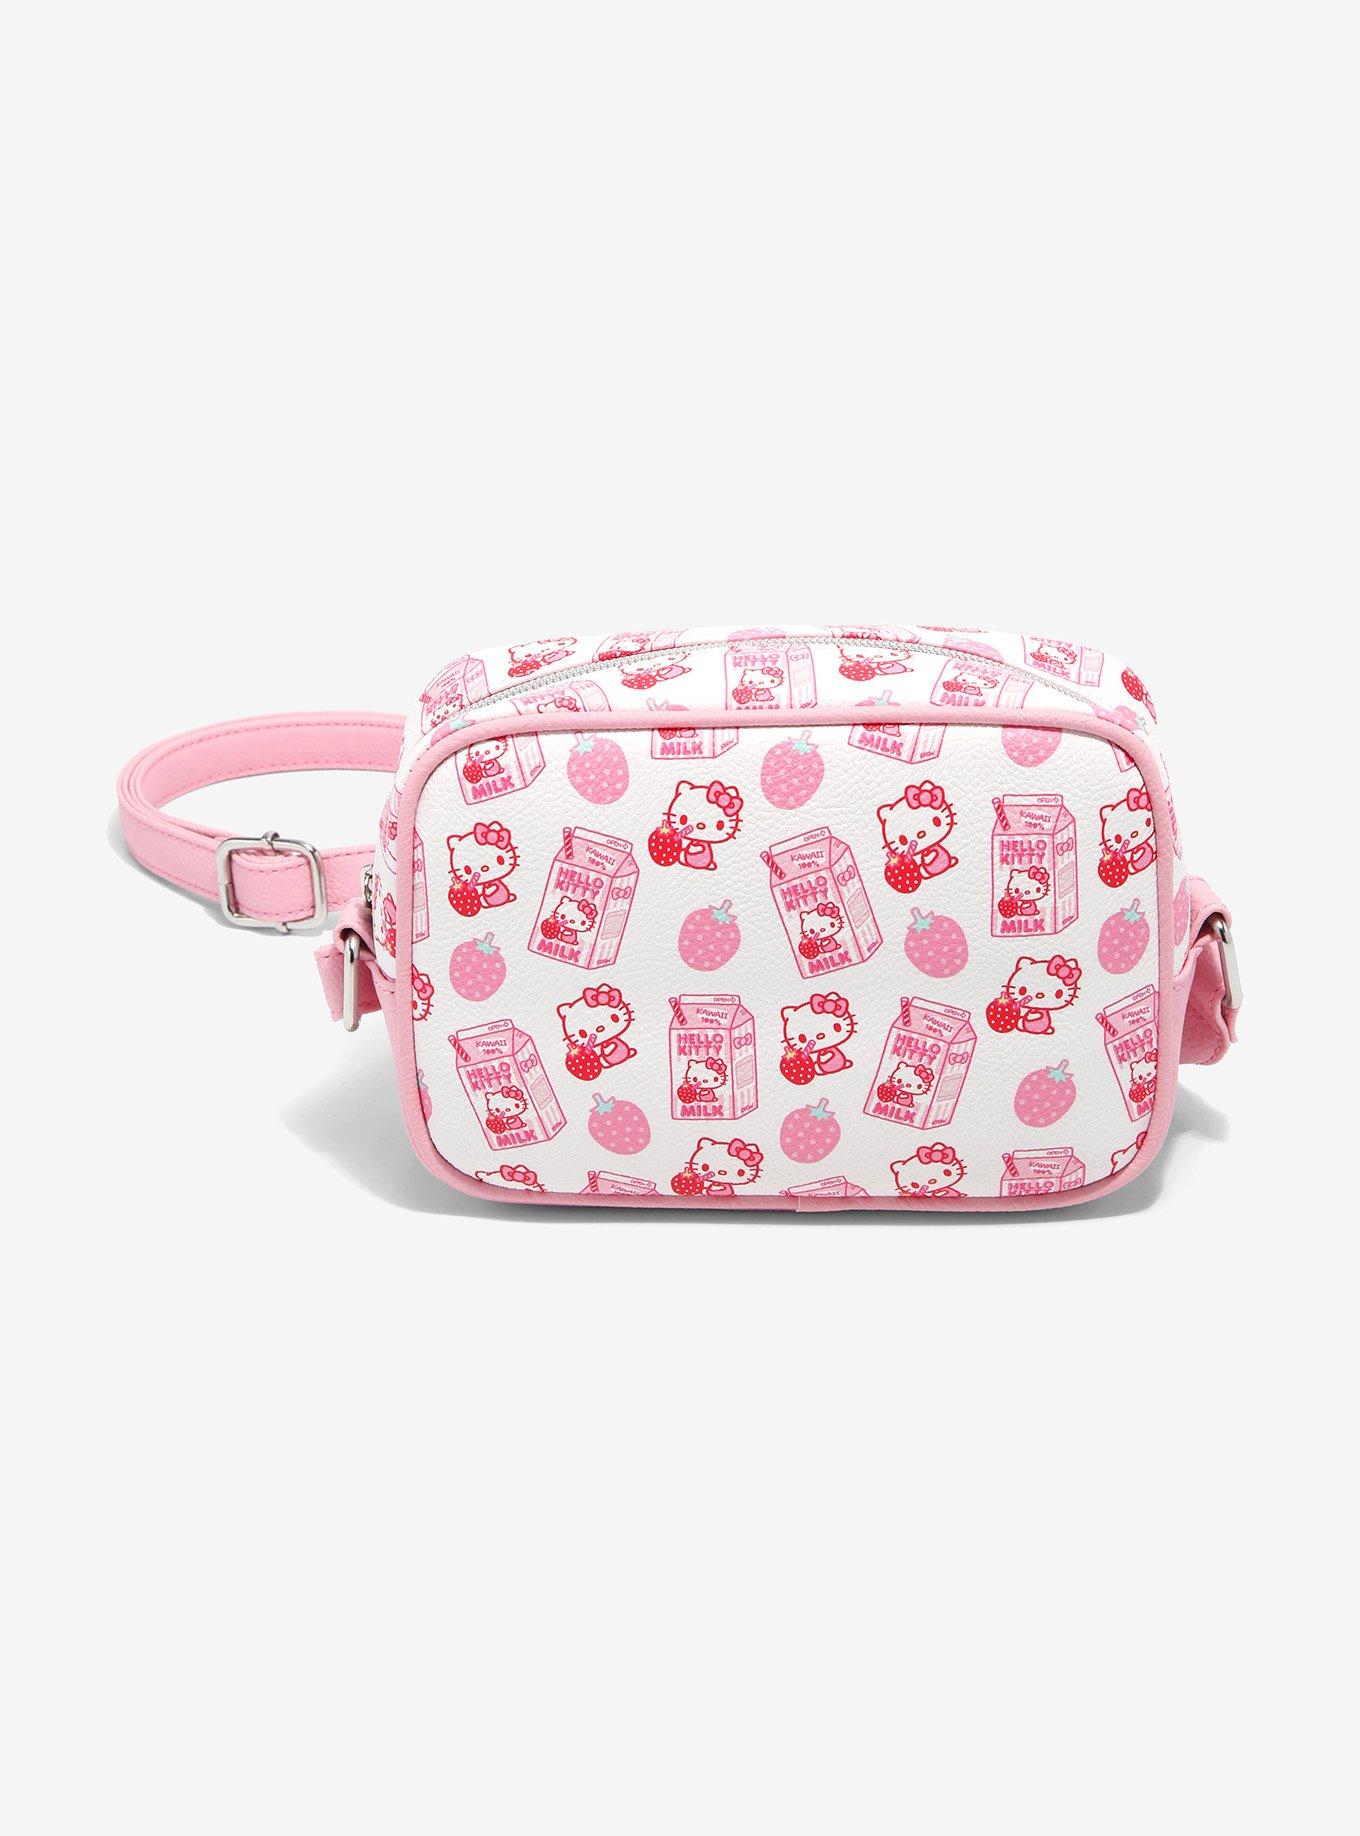 Hello Kitty Loungefly Crossbody Purse Bag Pink New w/ tags SANTB1604 